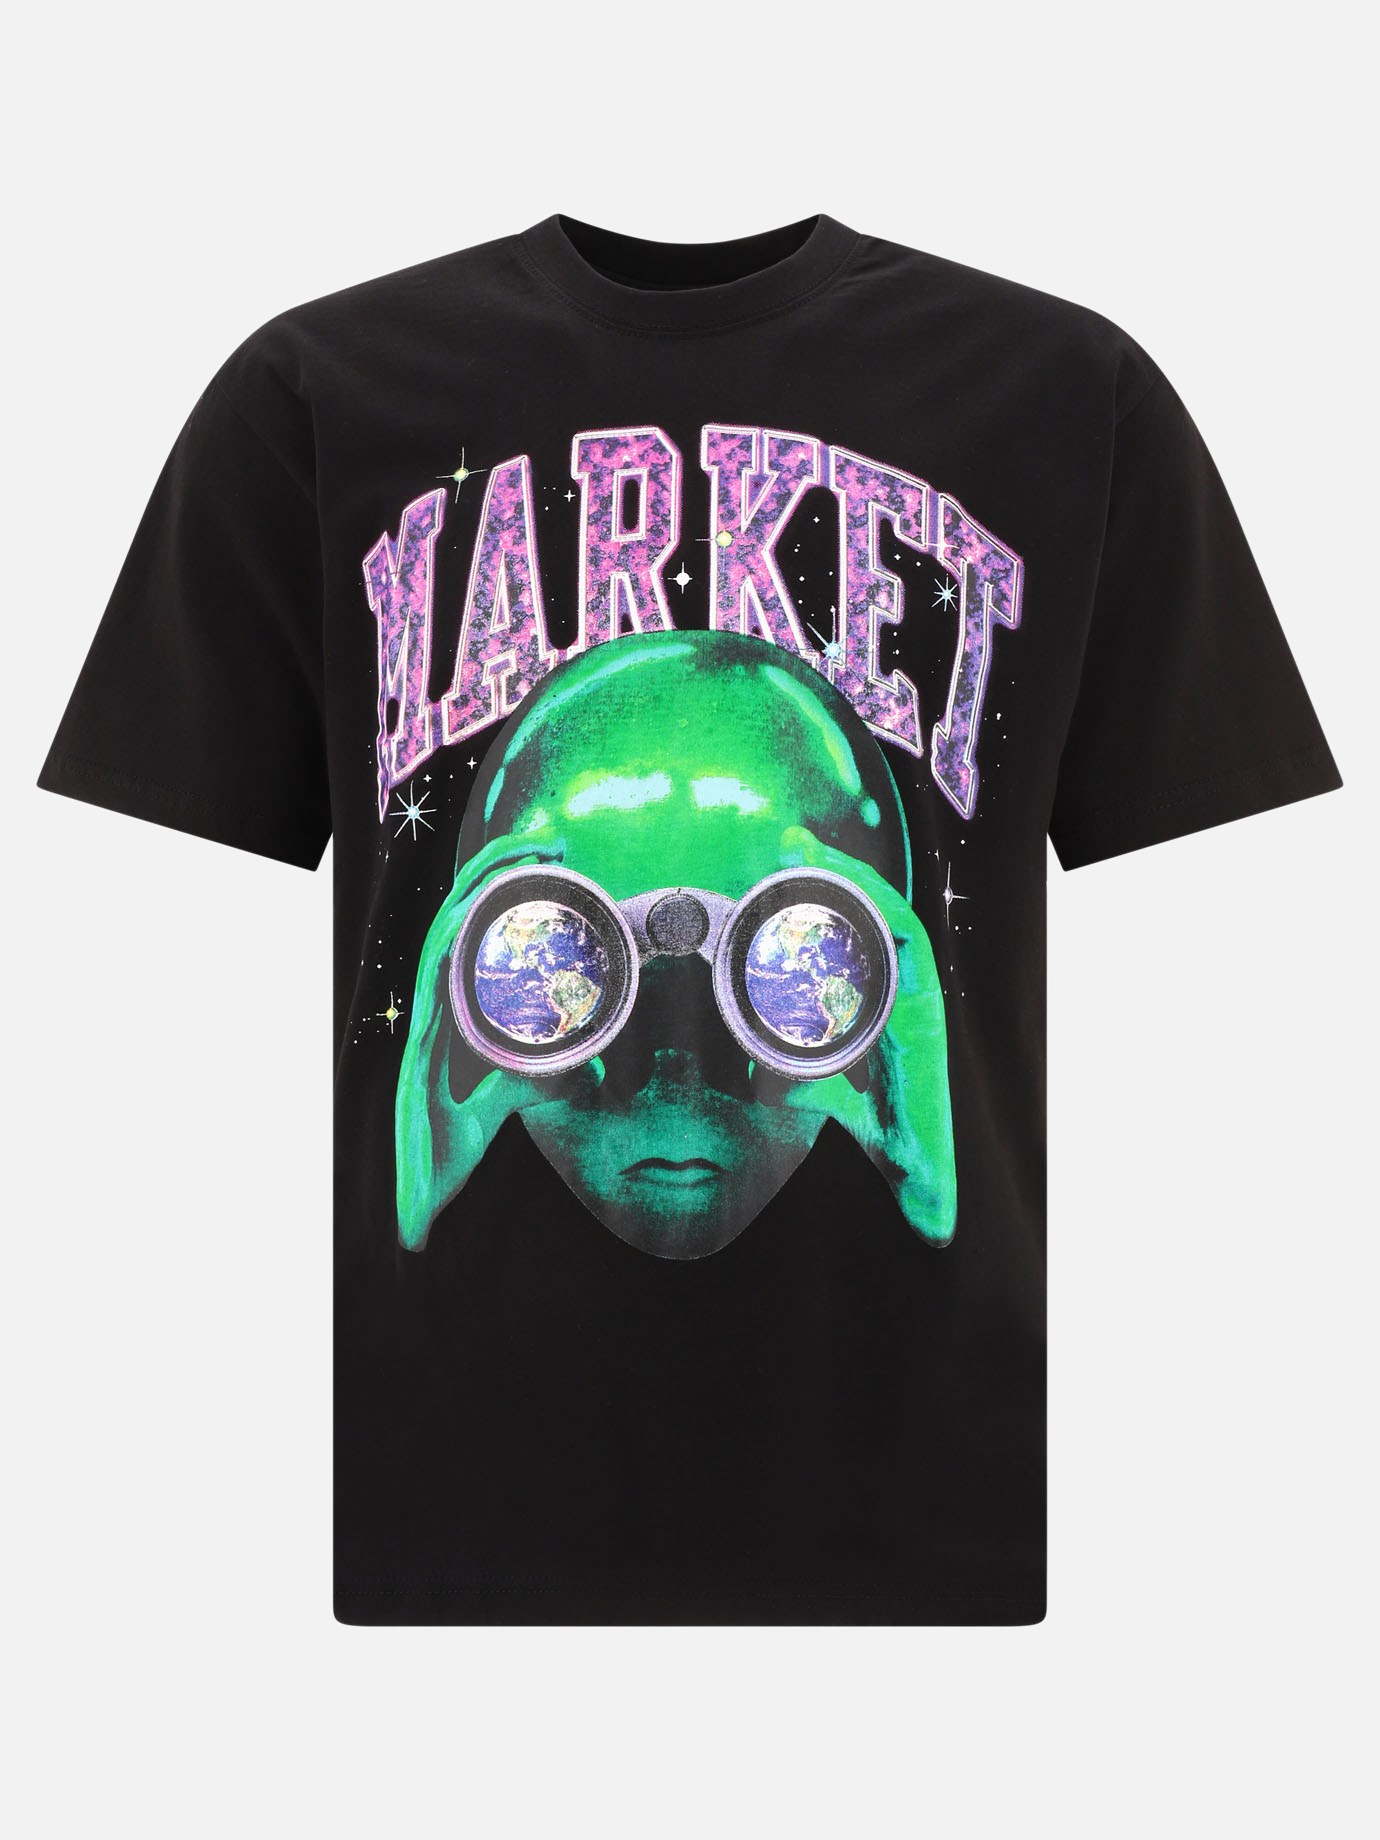  Alien Sightseeing  t-shirtby Market - 4